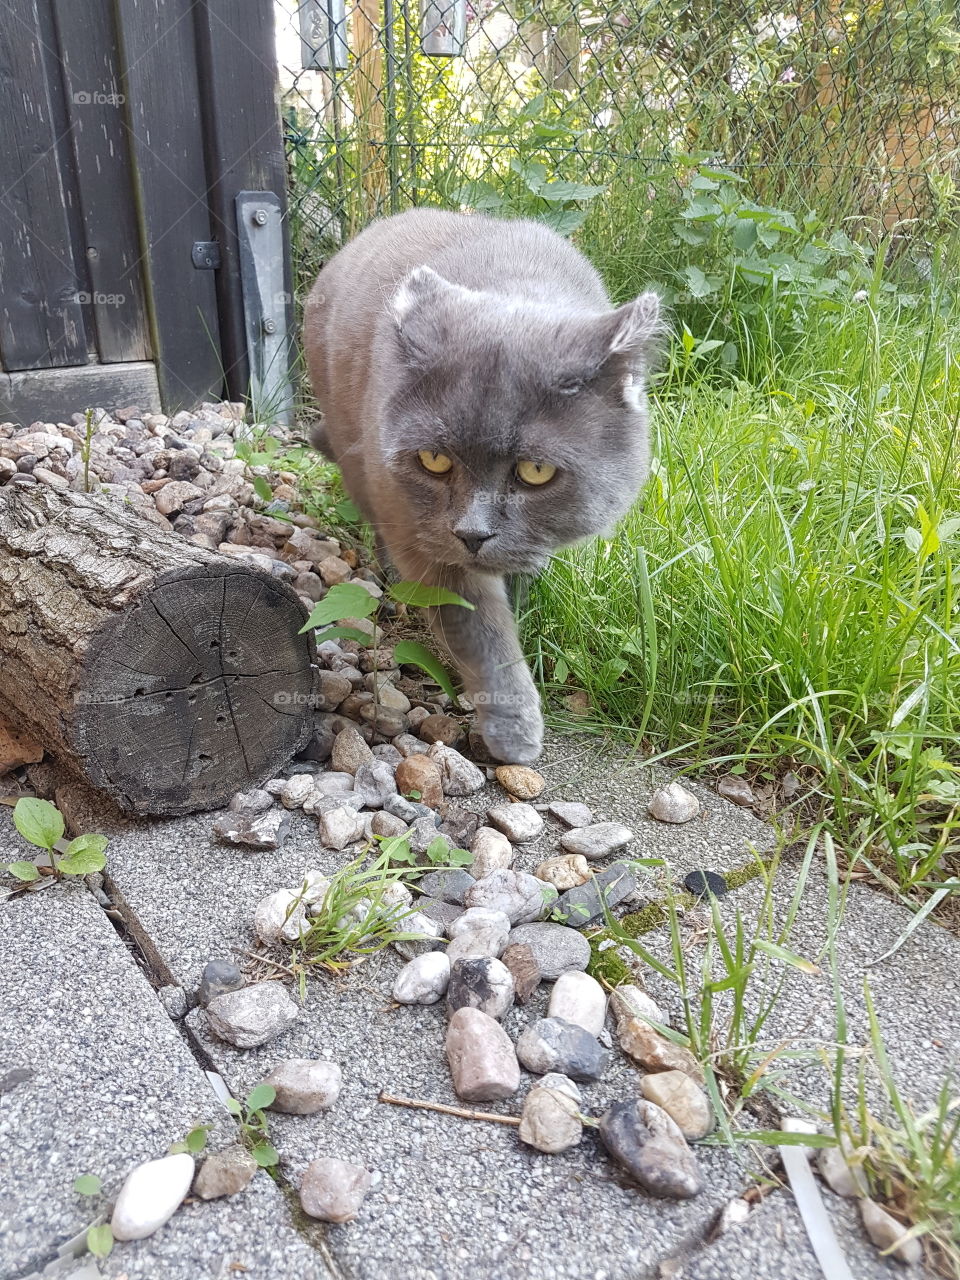 a beautiful gray cat with extraordinary eyes runs through nature and enjoys life